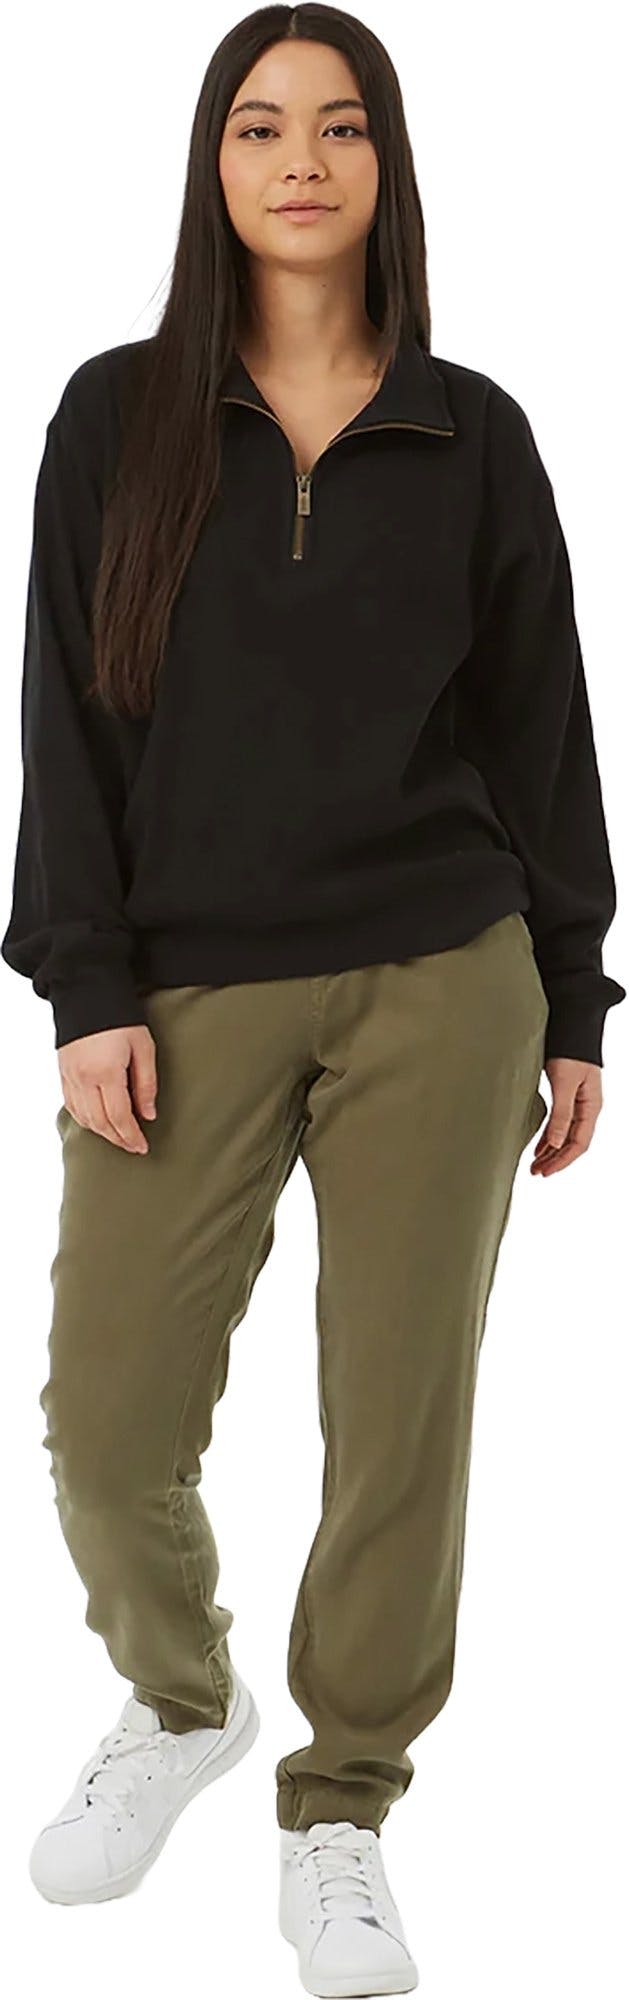 Product gallery image number 2 for product TreeWaffle Half Zip Sweatshirt - Women's